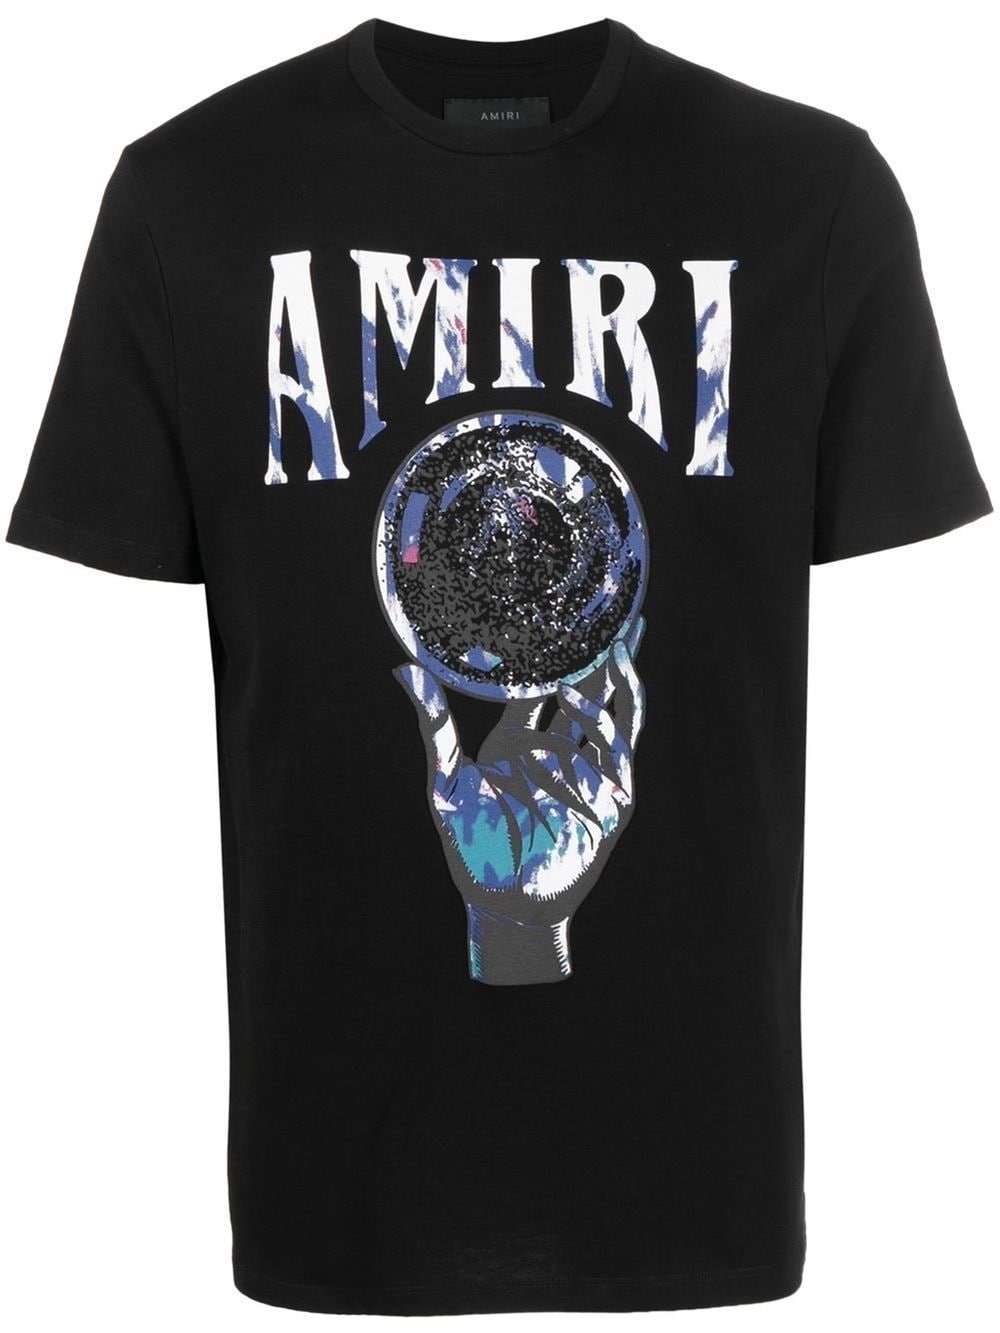 Crystal Ball cotton T-shirt, AMIRI